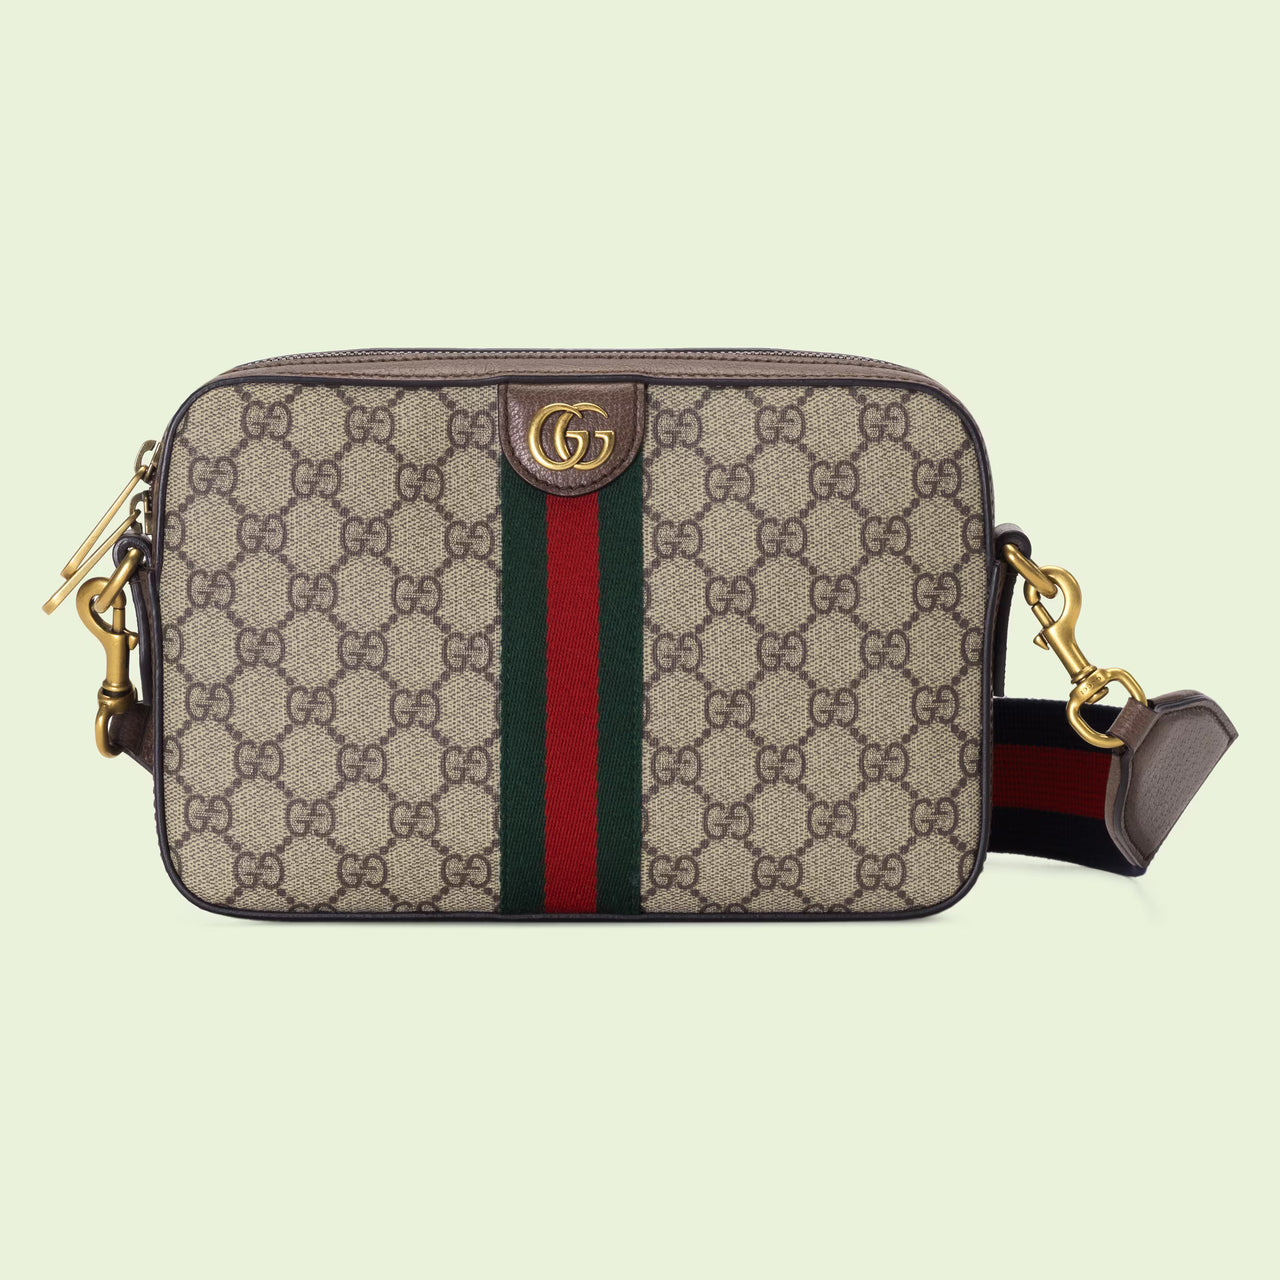 Gucci Ophidia GG Shoulder Bag  (Beige & Ebony)